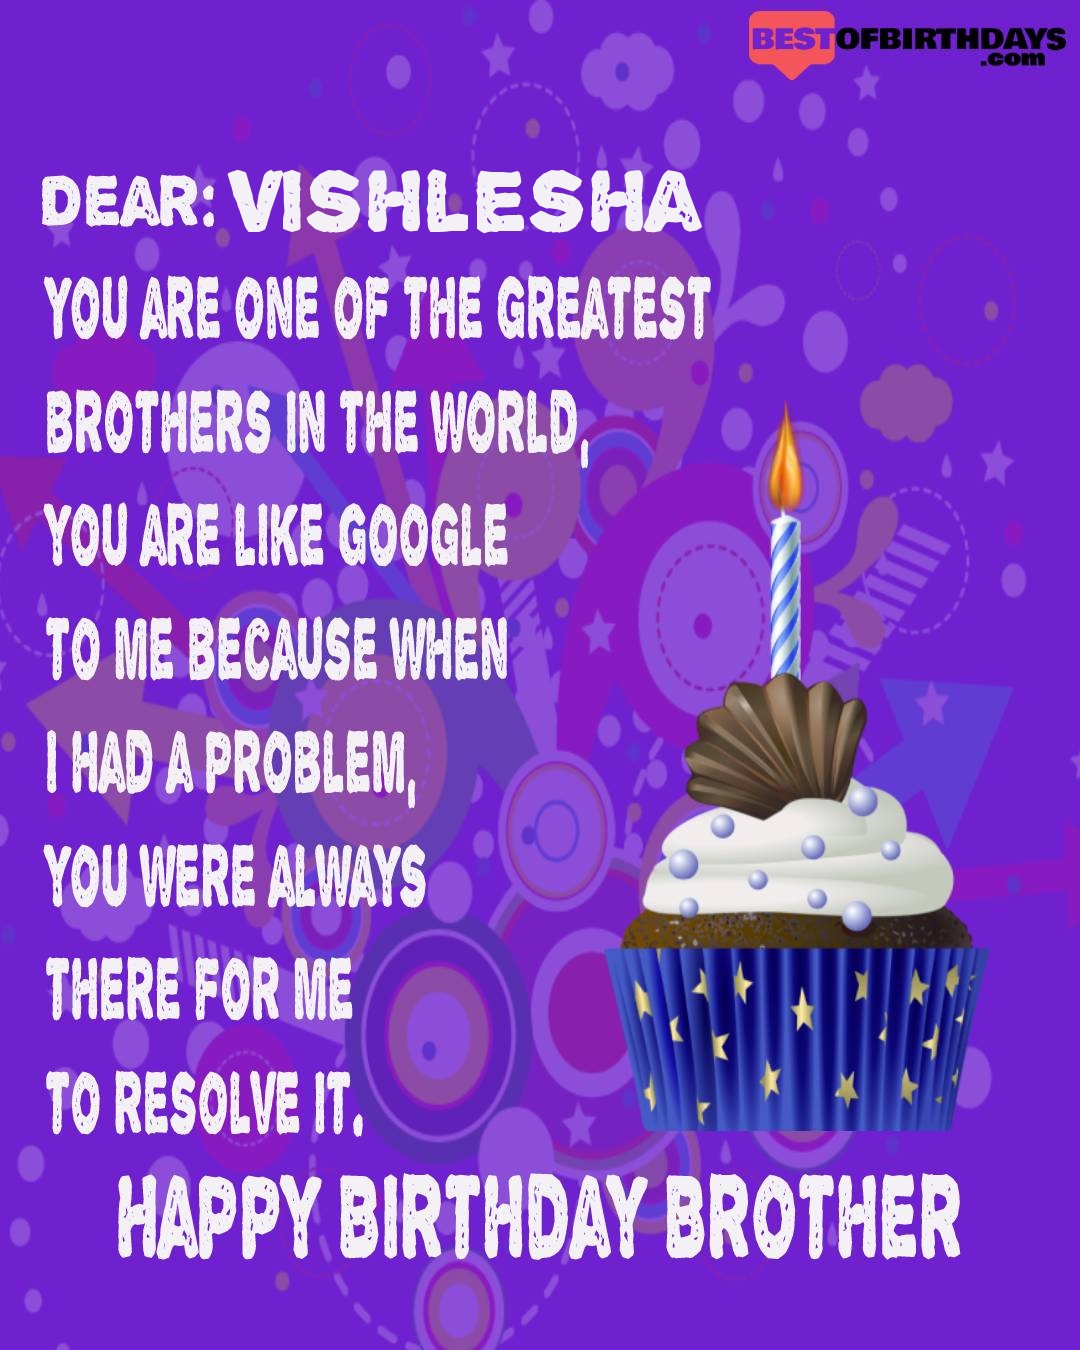 Happy birthday vishlesha bhai brother bro